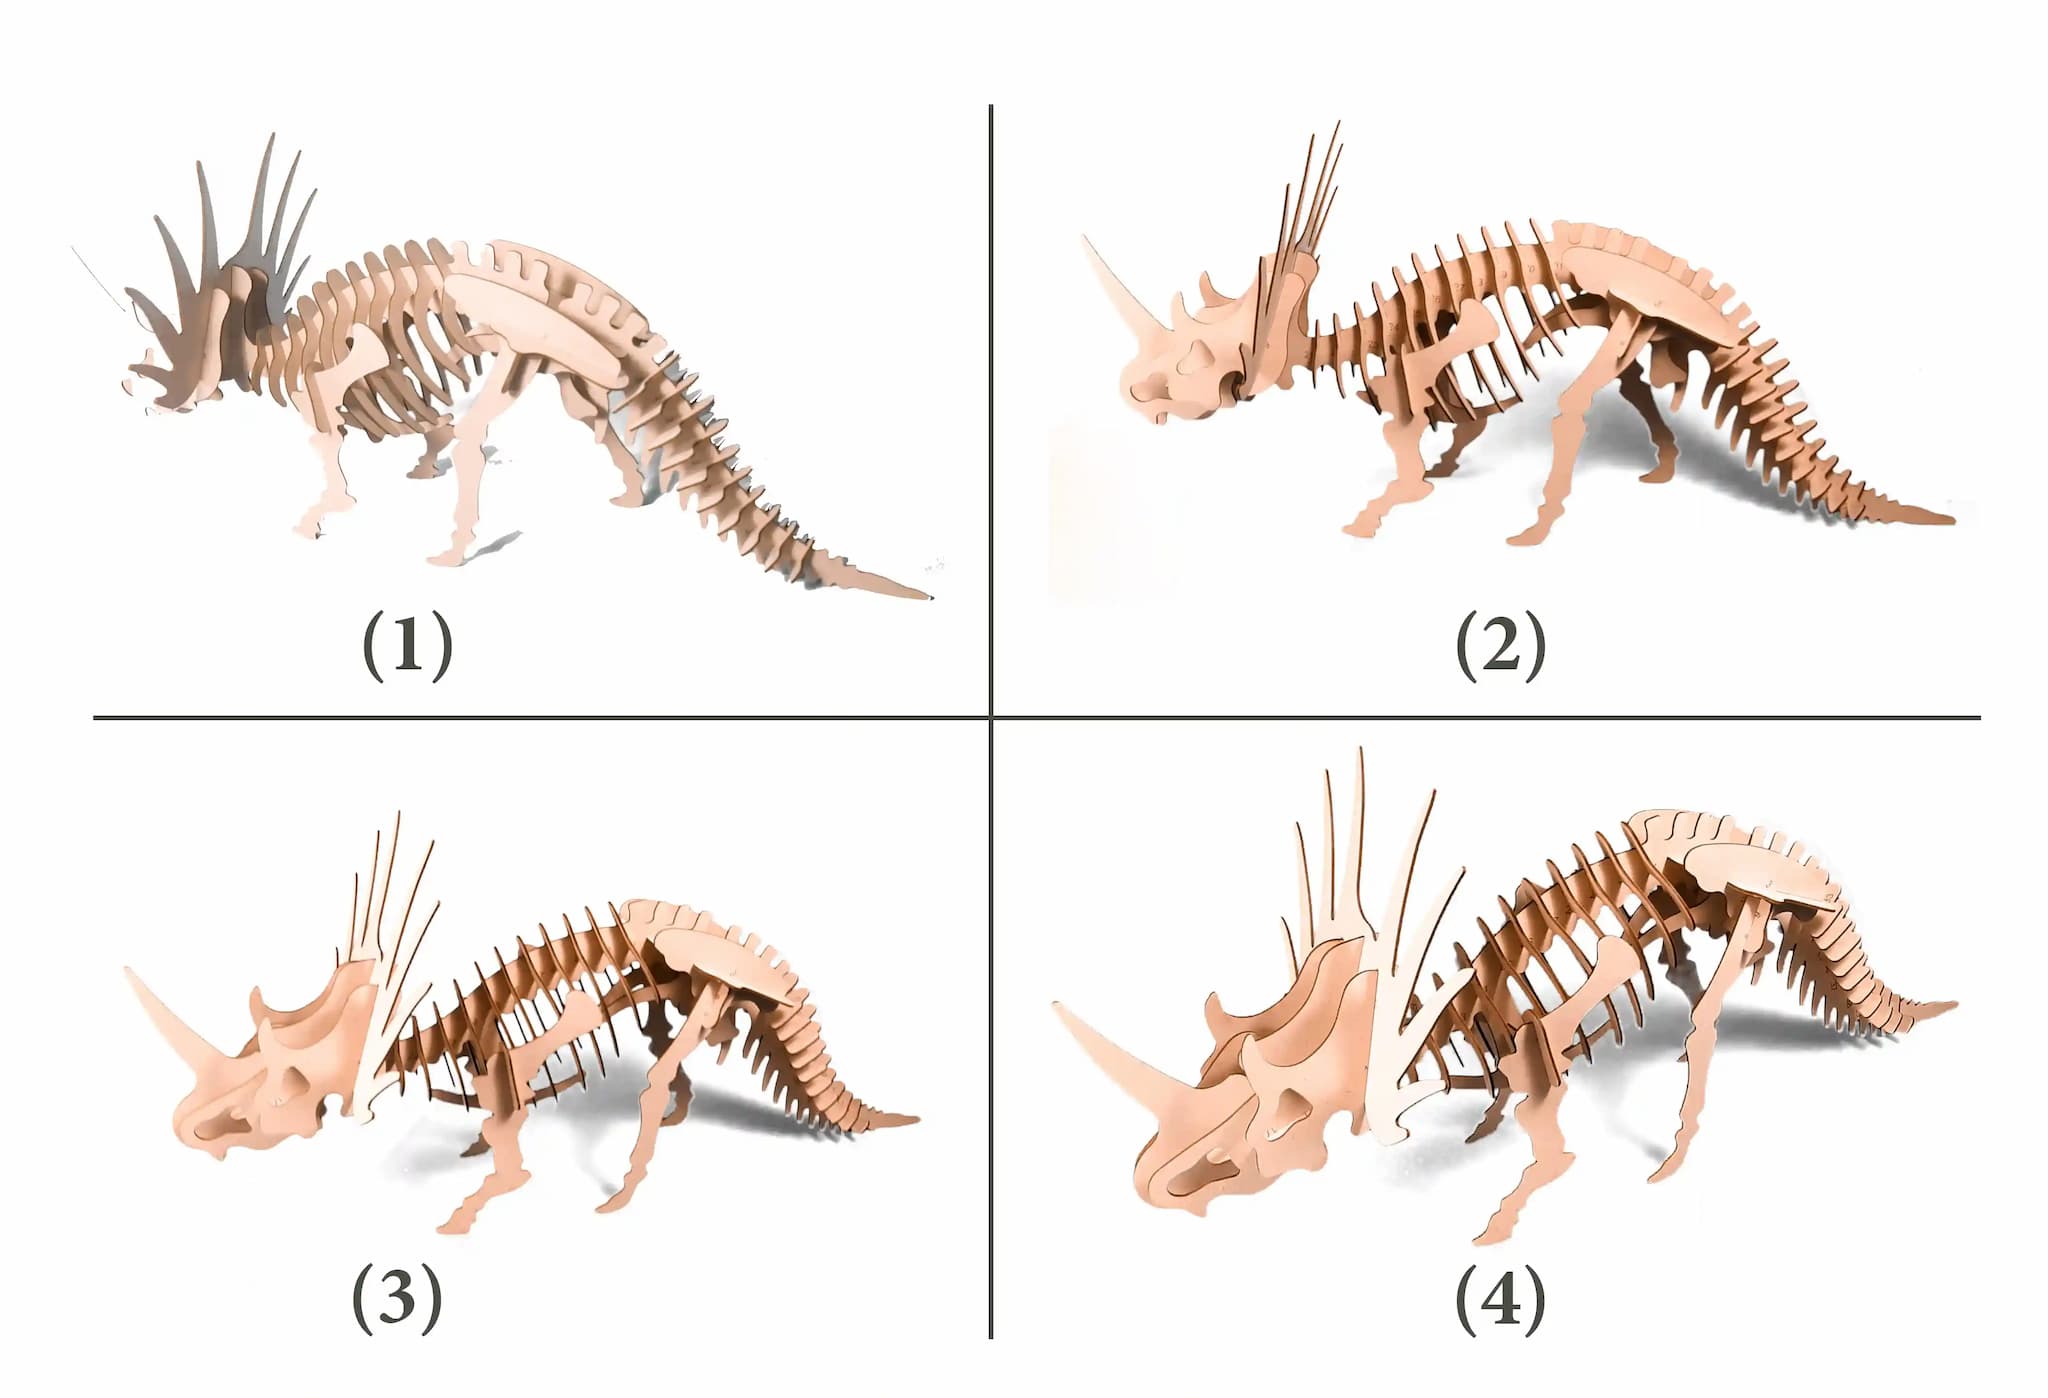 3D Model of Styracosaurus Dinosaur in Form of Puzzle DIY KIT